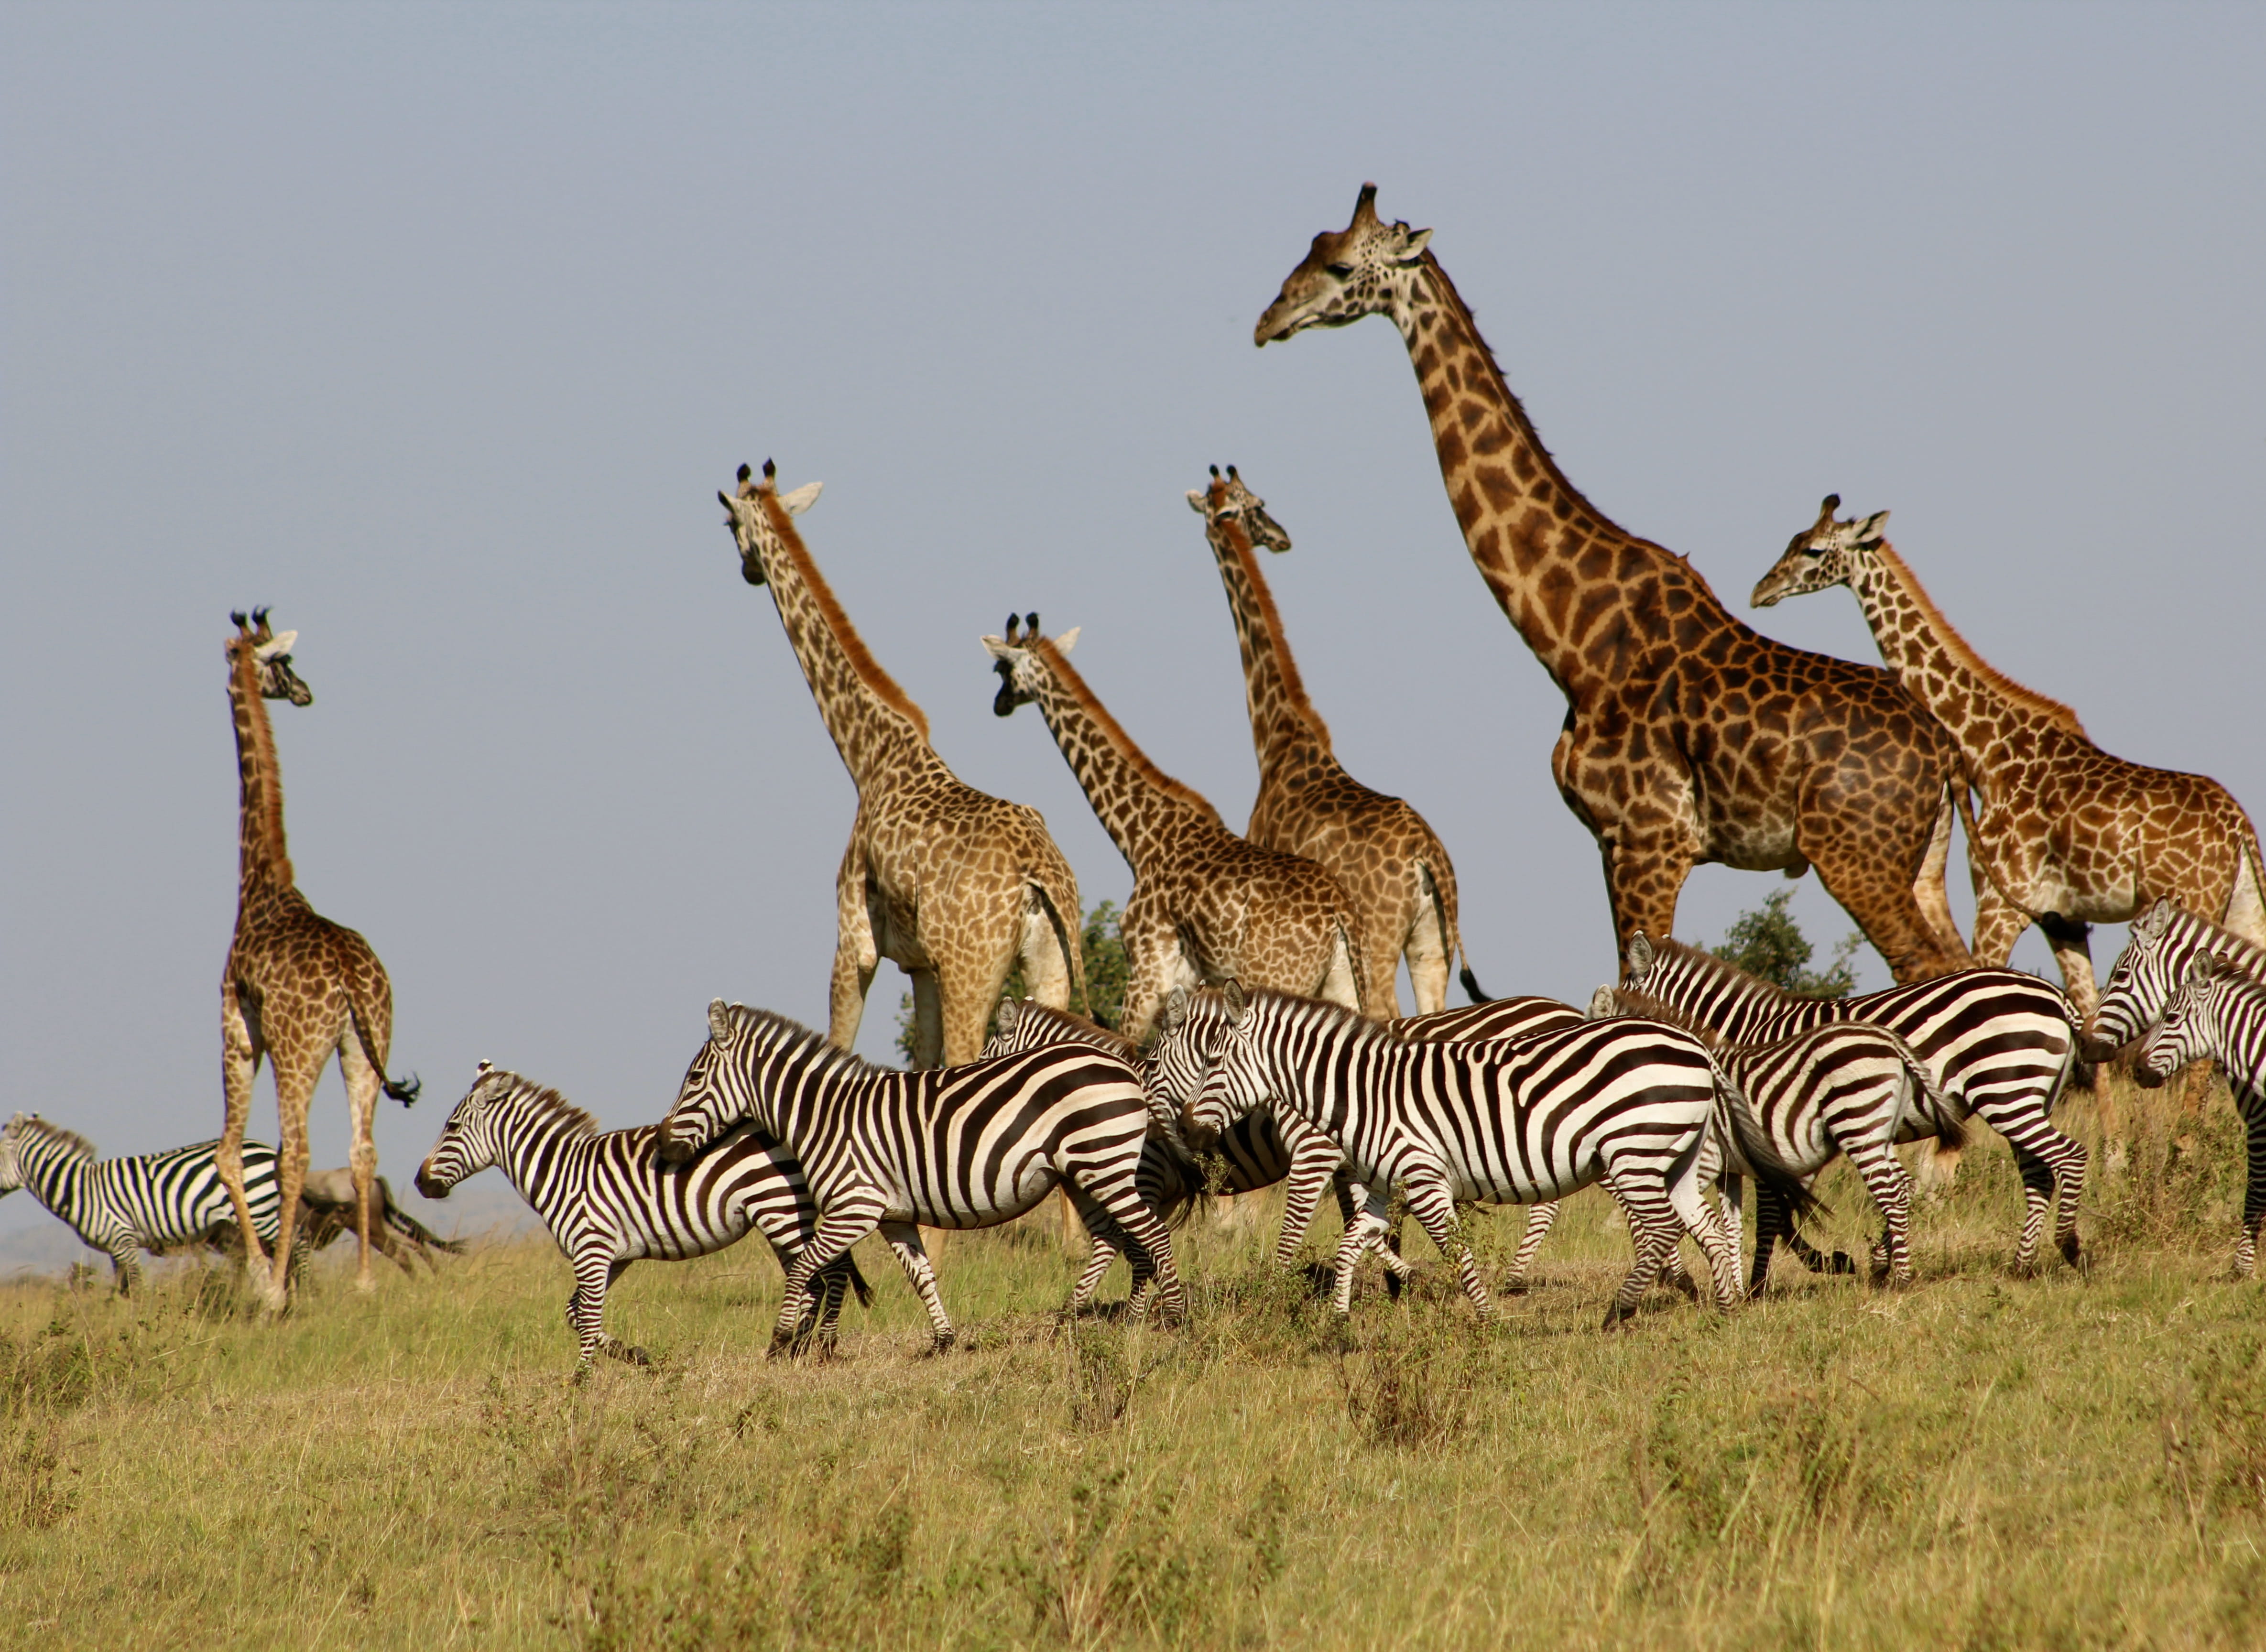 group of giraffes and zebras, mammal, wildlife, animal, outdoors